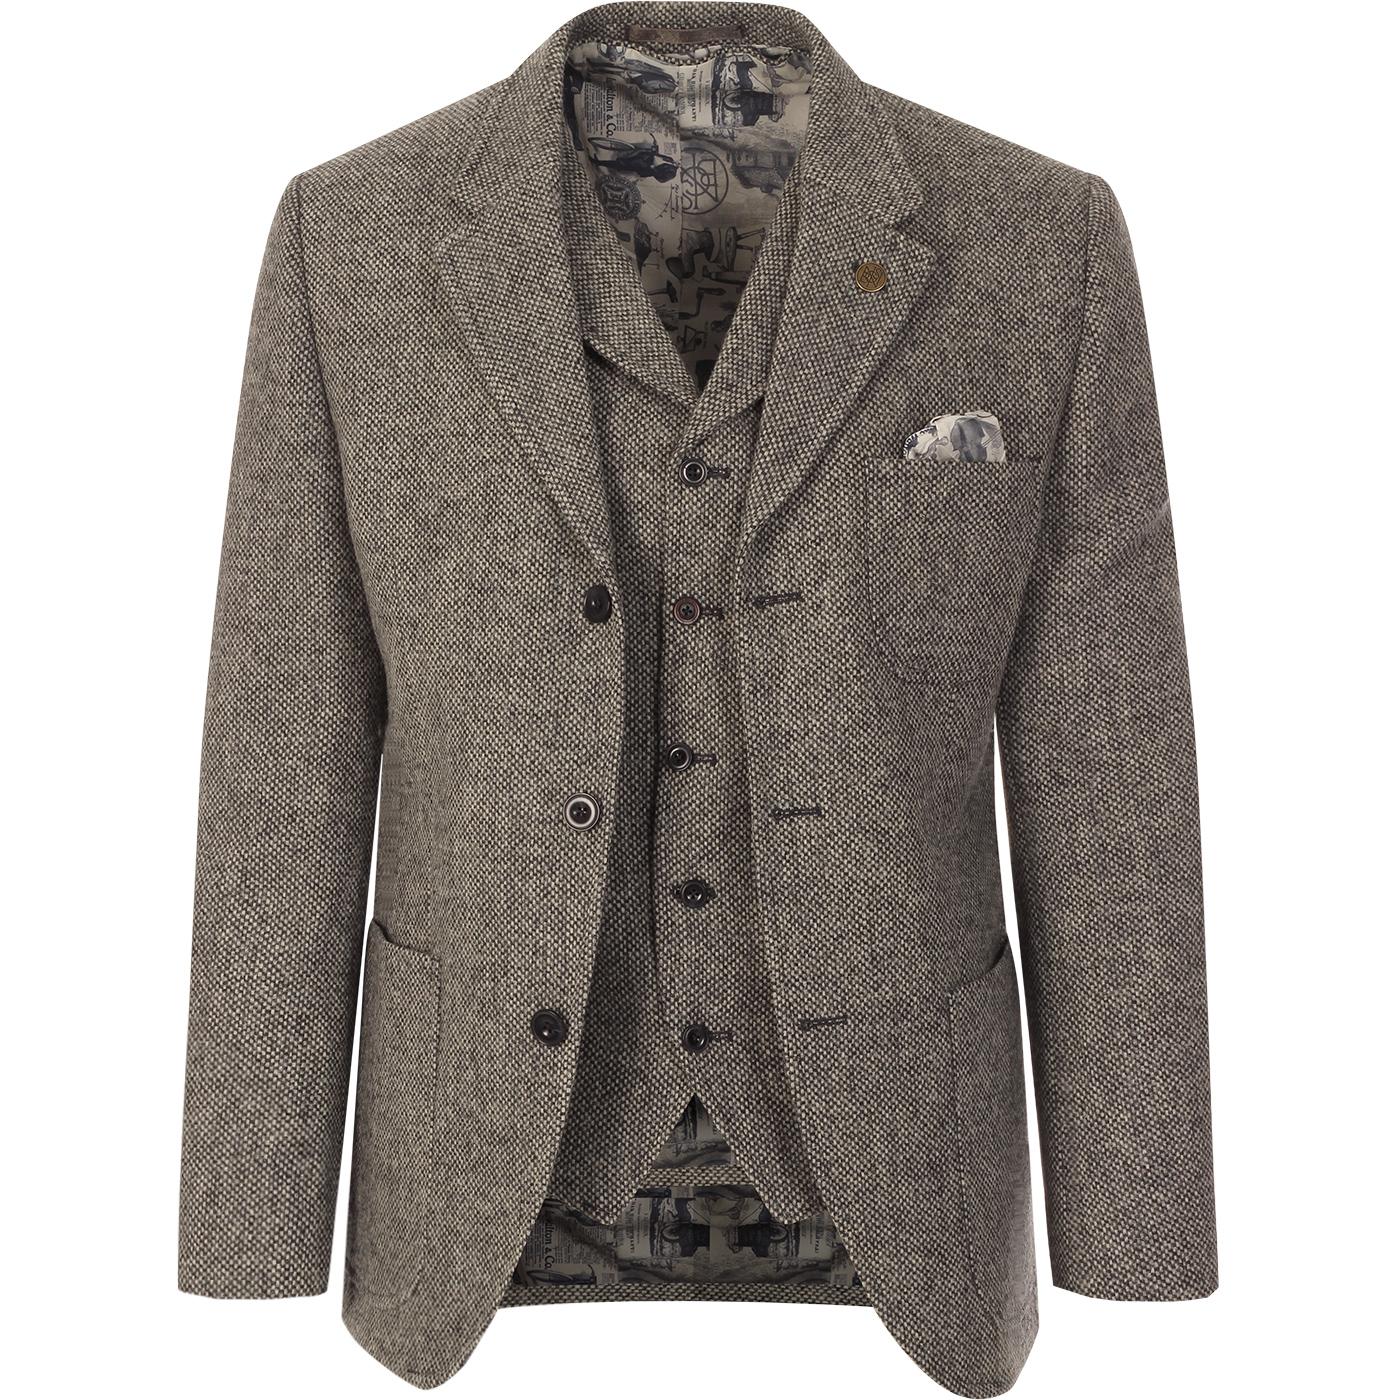 GIBSON LONDON Shetland Birdseye Blazer & Waistcoat